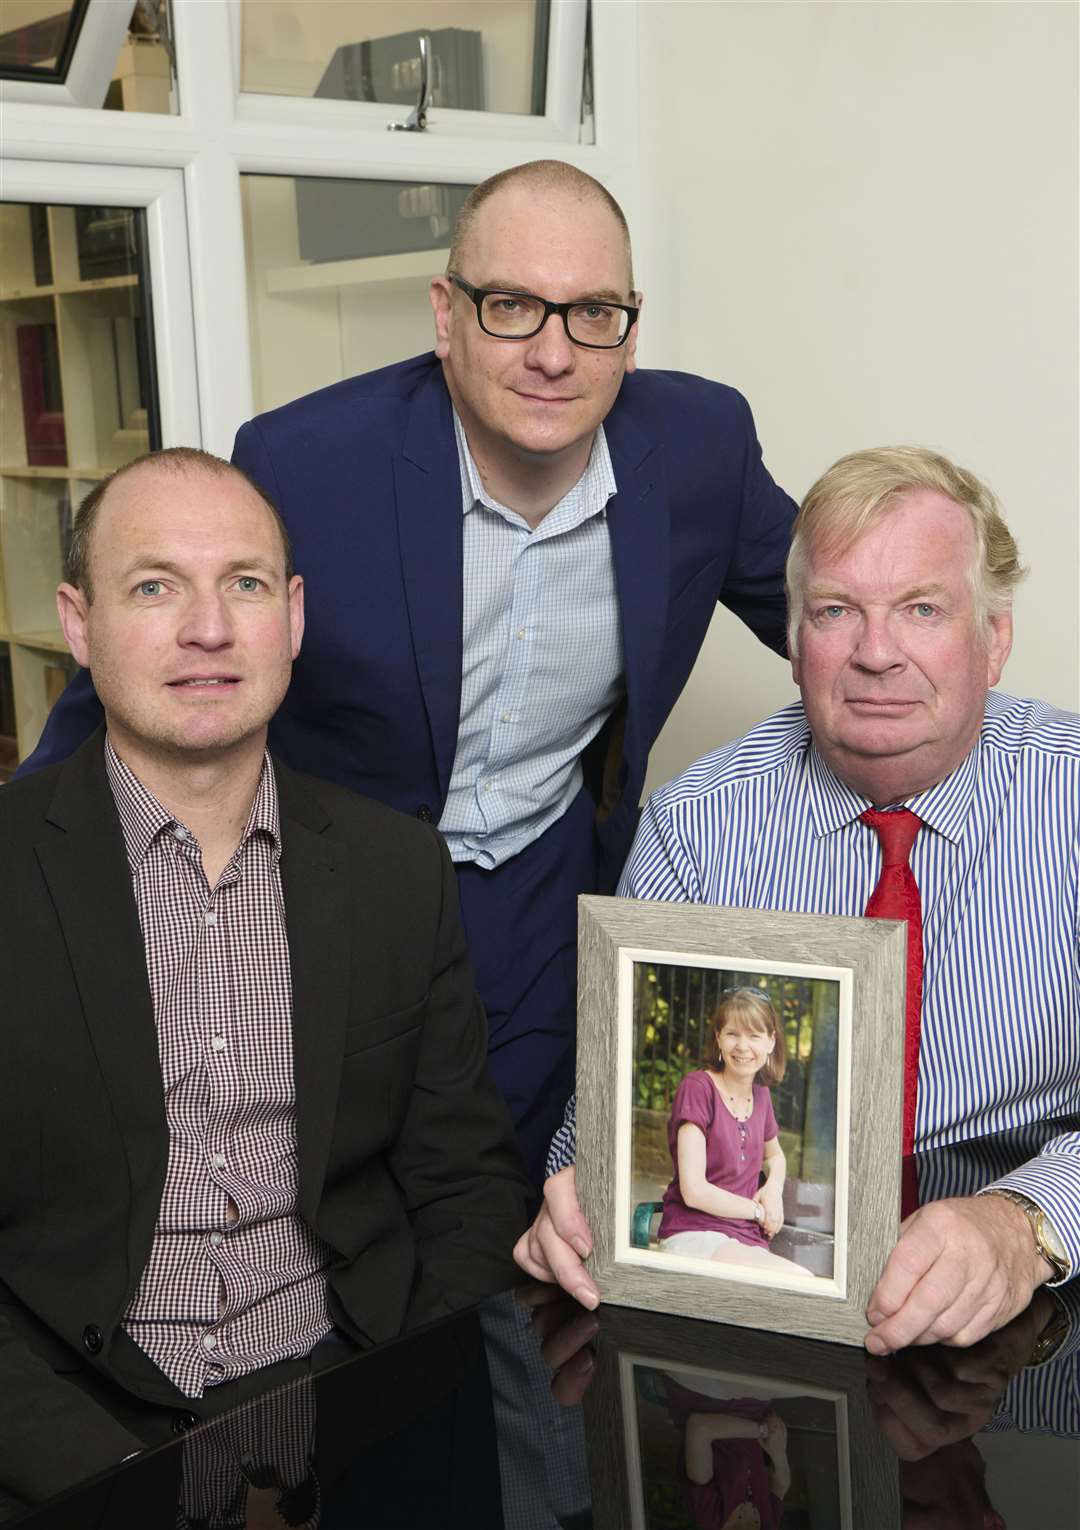 Scott, Chris and David Dowling launched Jennifer's Fund last year in memory of Jennifer McBurnie.